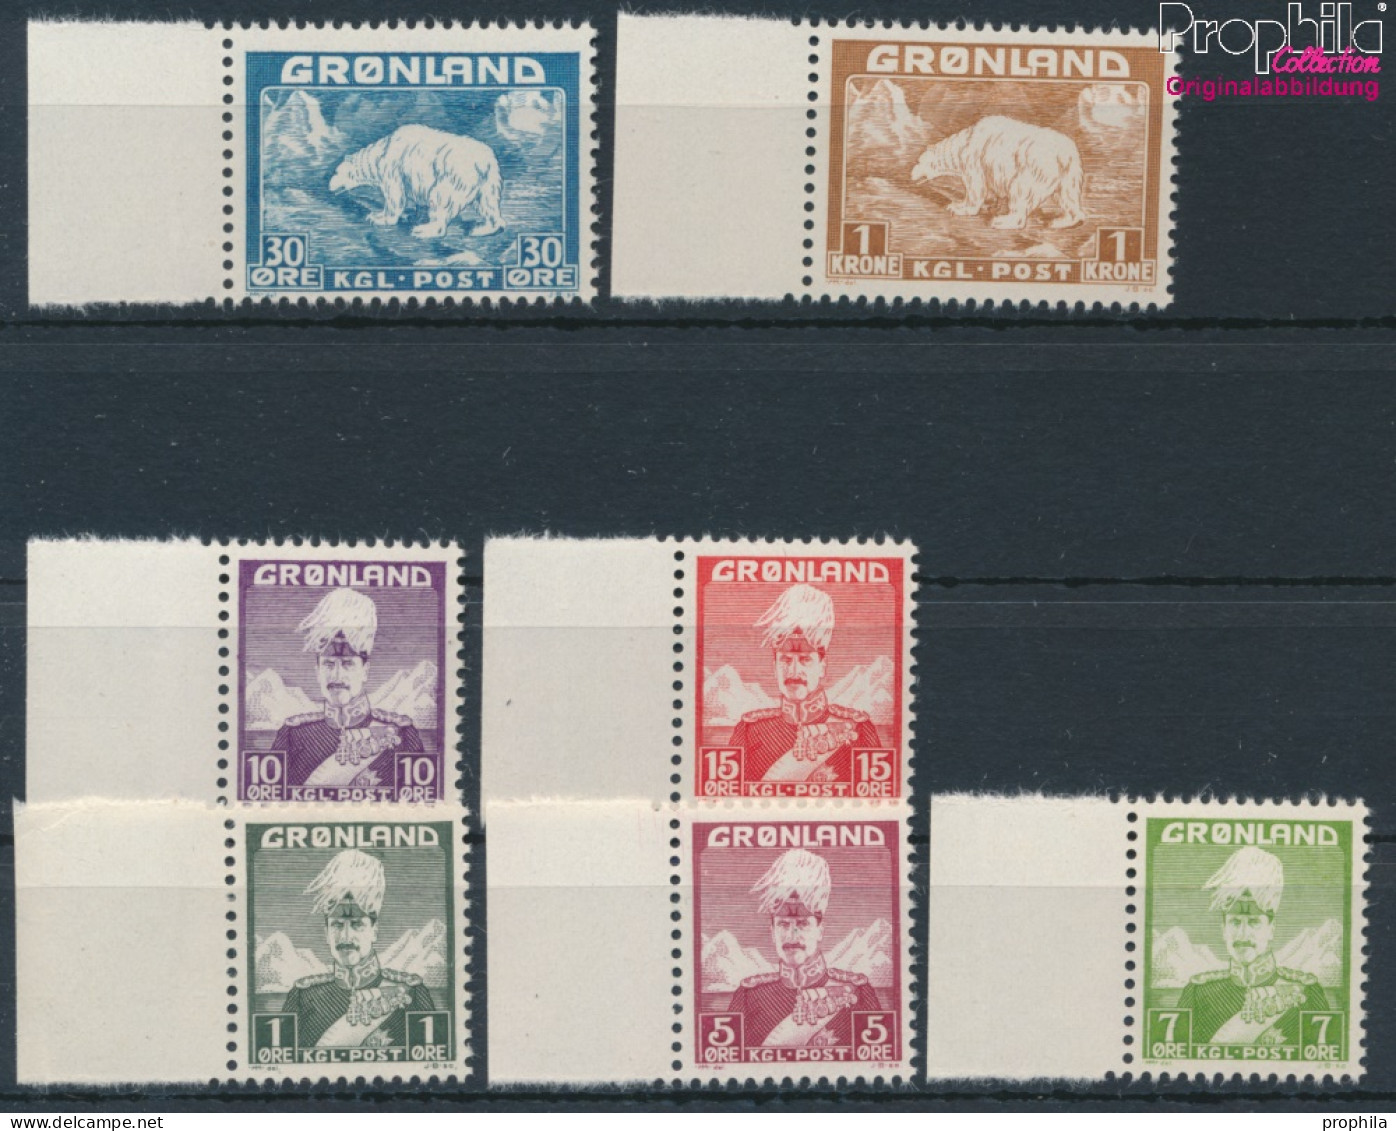 Dänemark - Grönland Postfrisch Christian X. 1938 König Christian X.  (10174202 - Usati